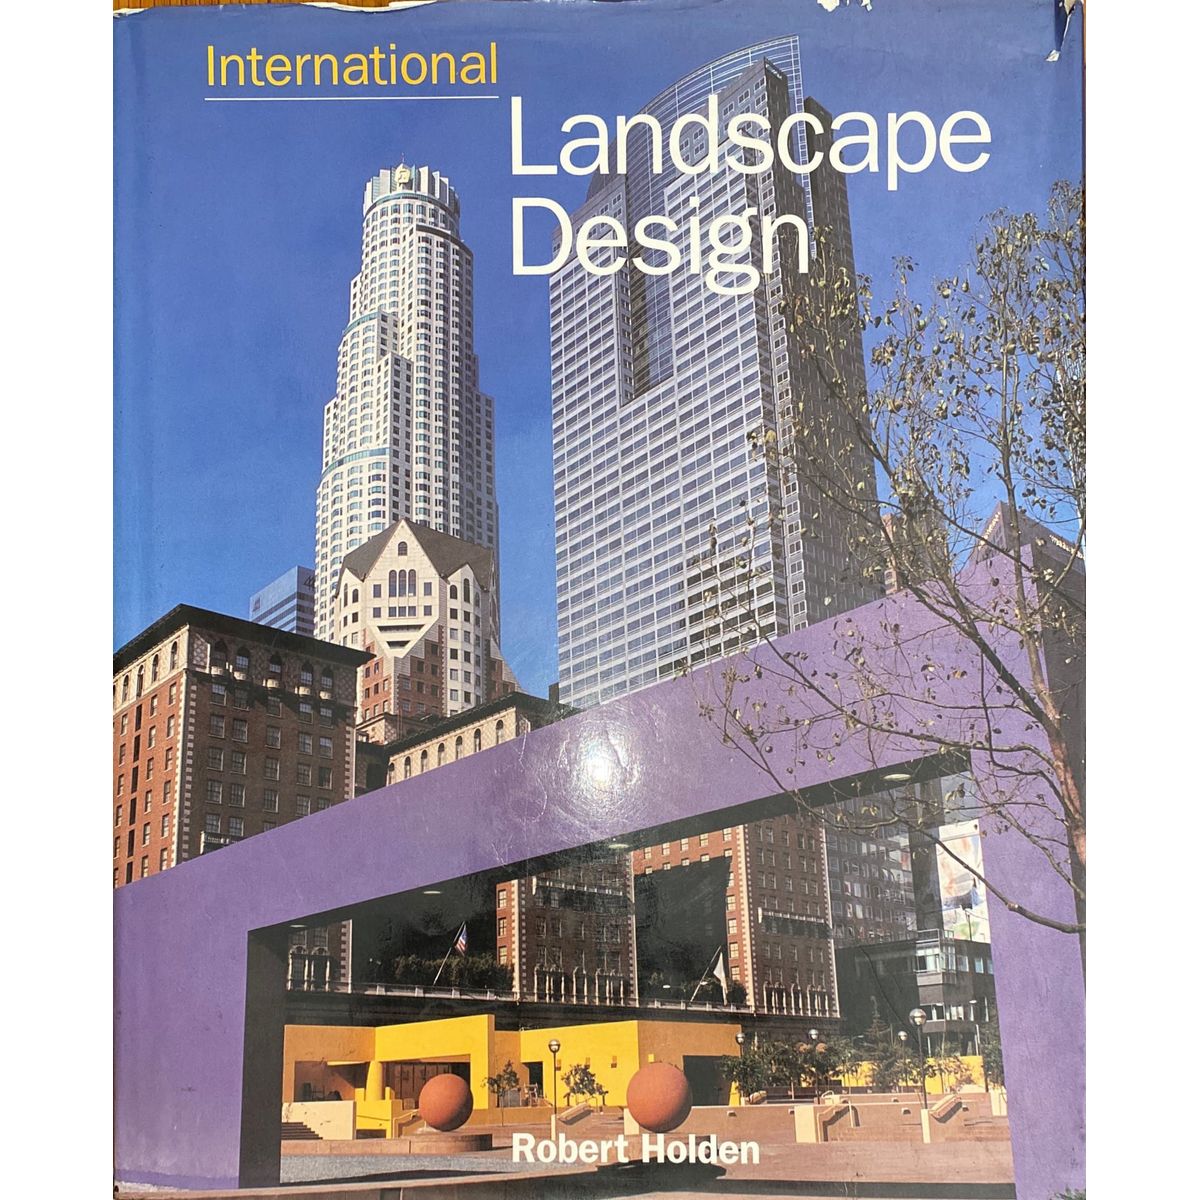 ISBN: 9781856690850 / 1856690857 - International Landscape Design by Robert Holden [1996]